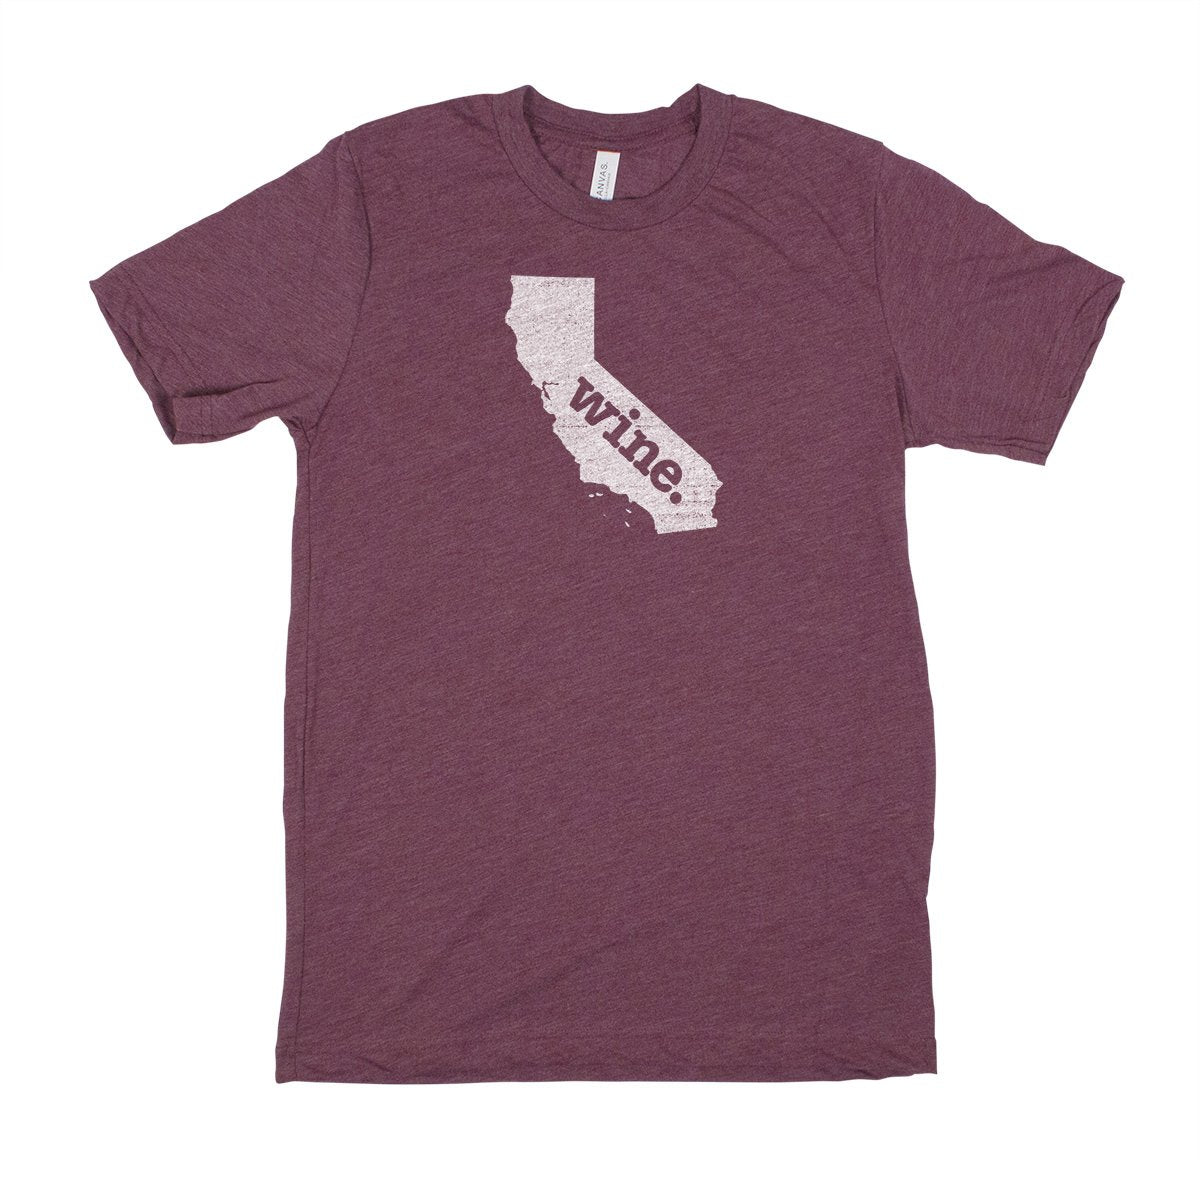 run. Men's Unisex T-Shirt - Louisiana